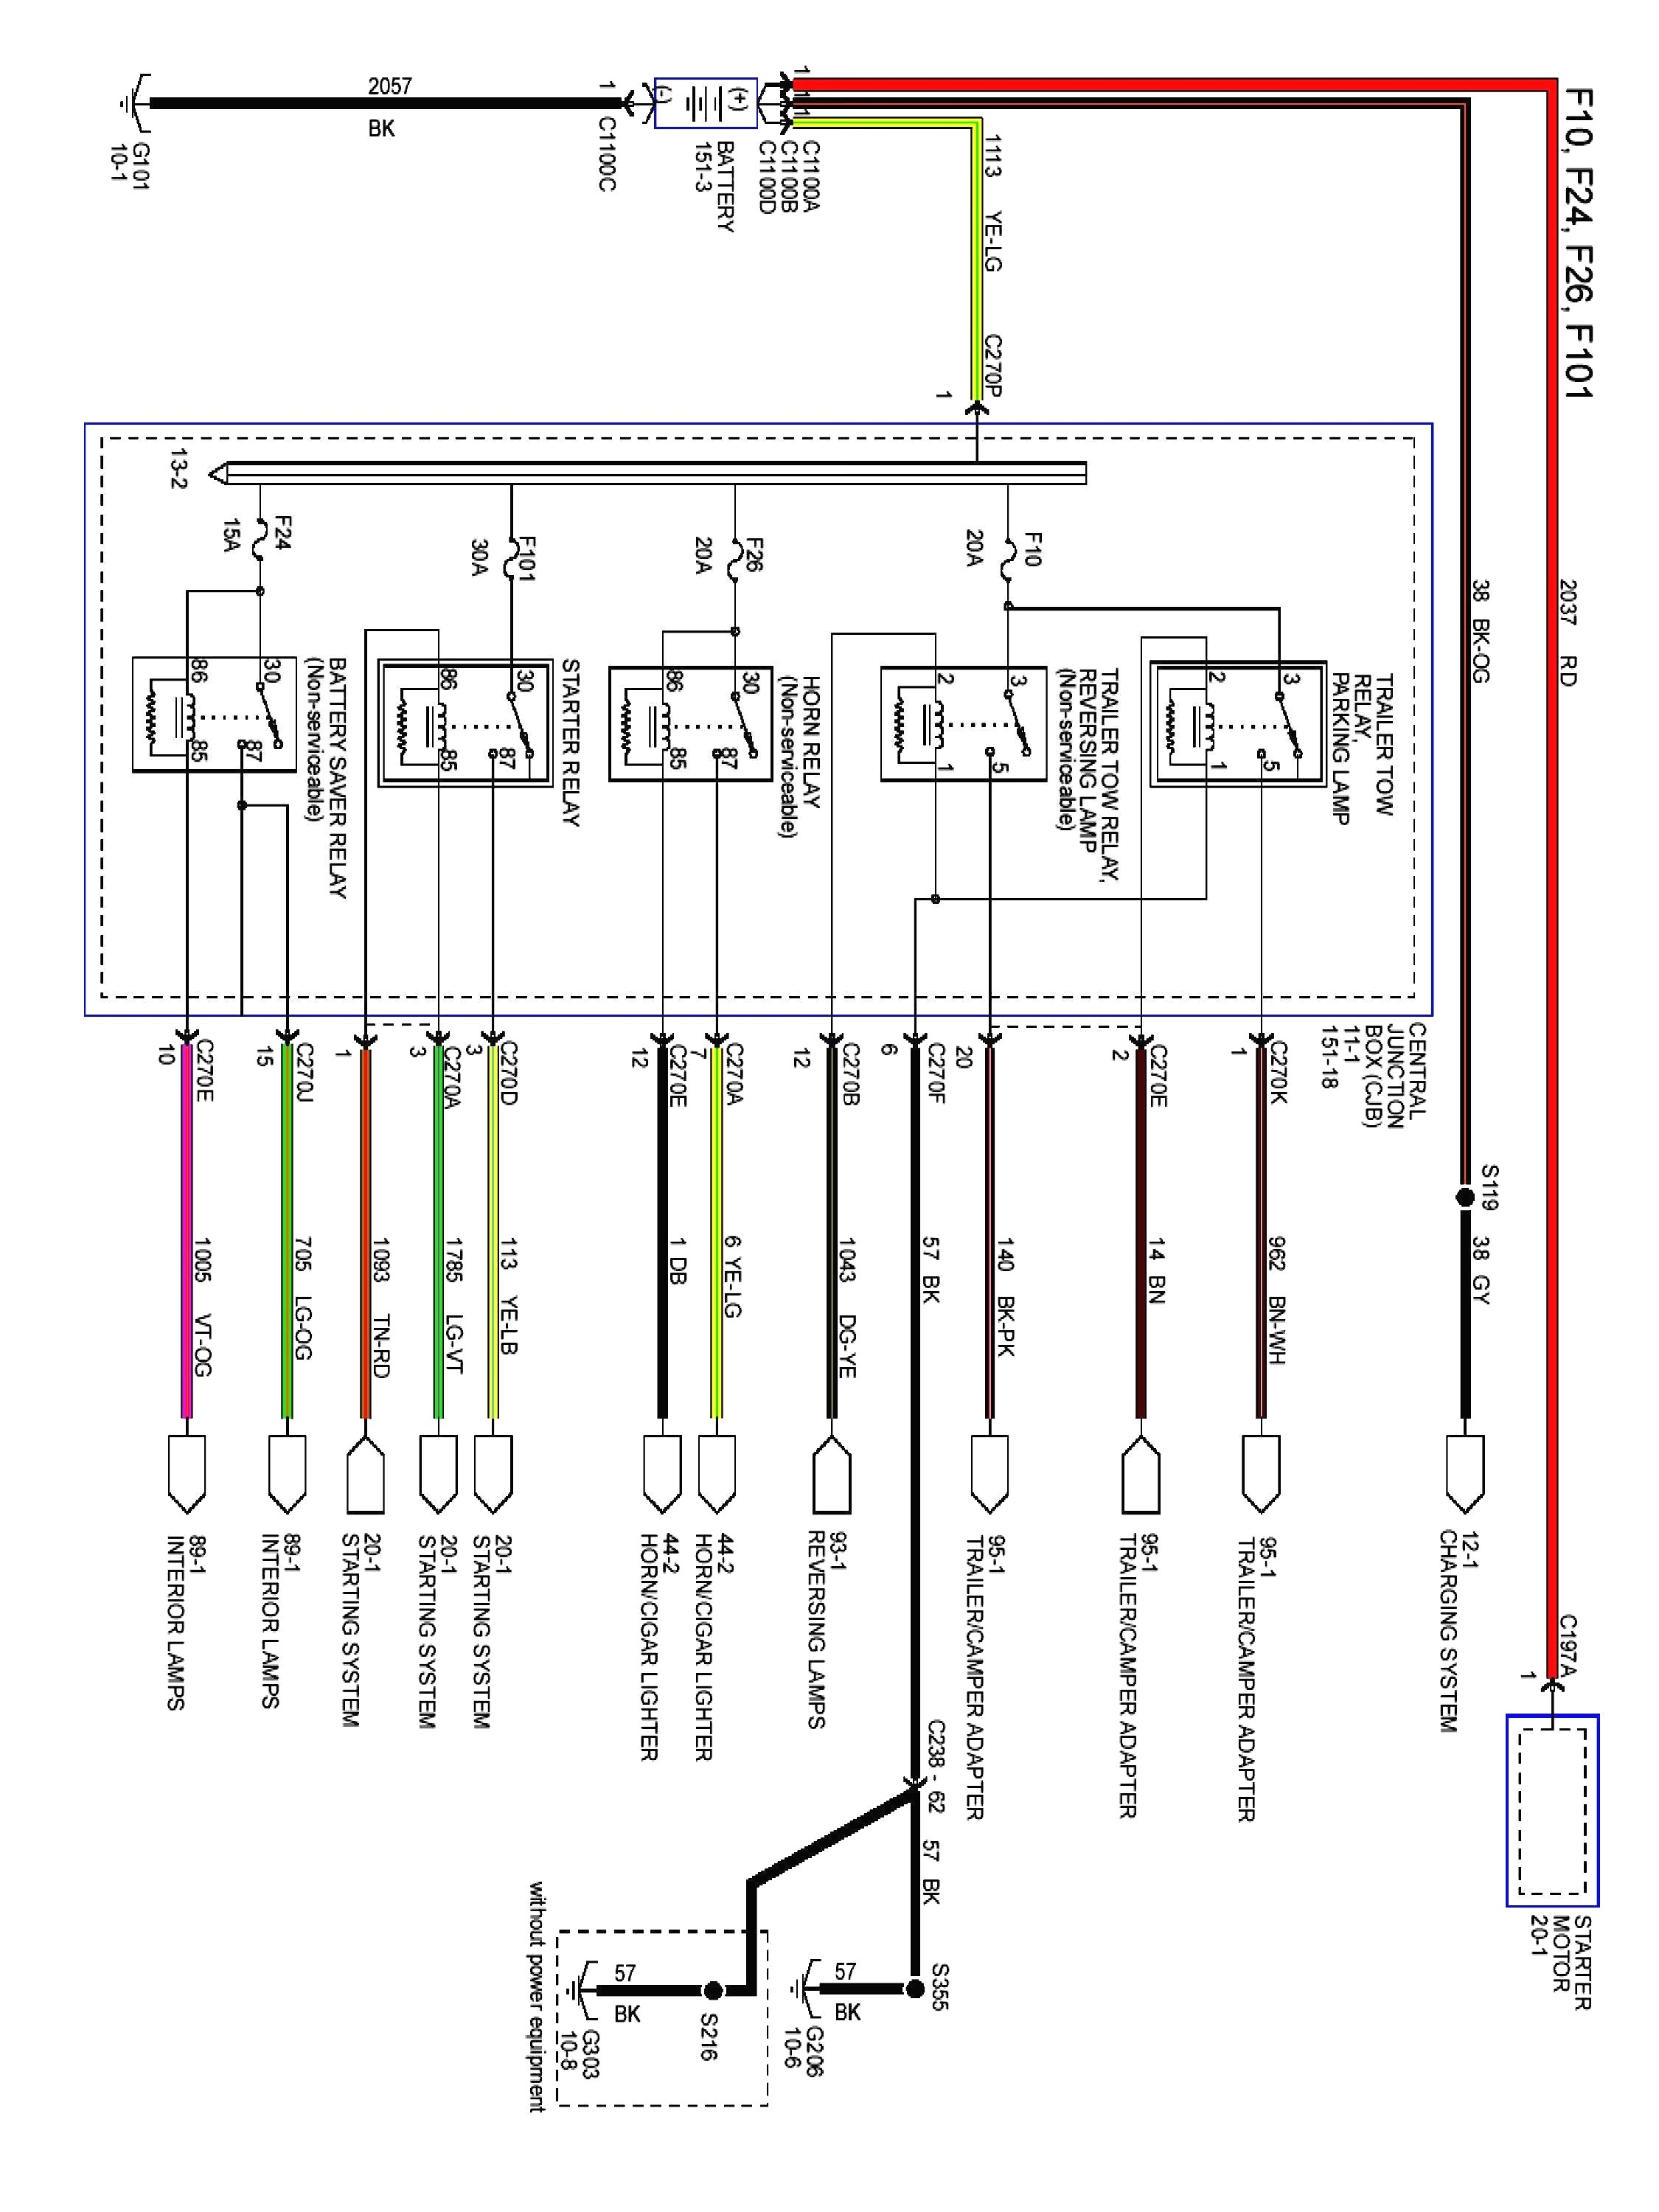 03 ford windstar fuse diagram wiring diagram new 03 explorer alternator wiring diagram